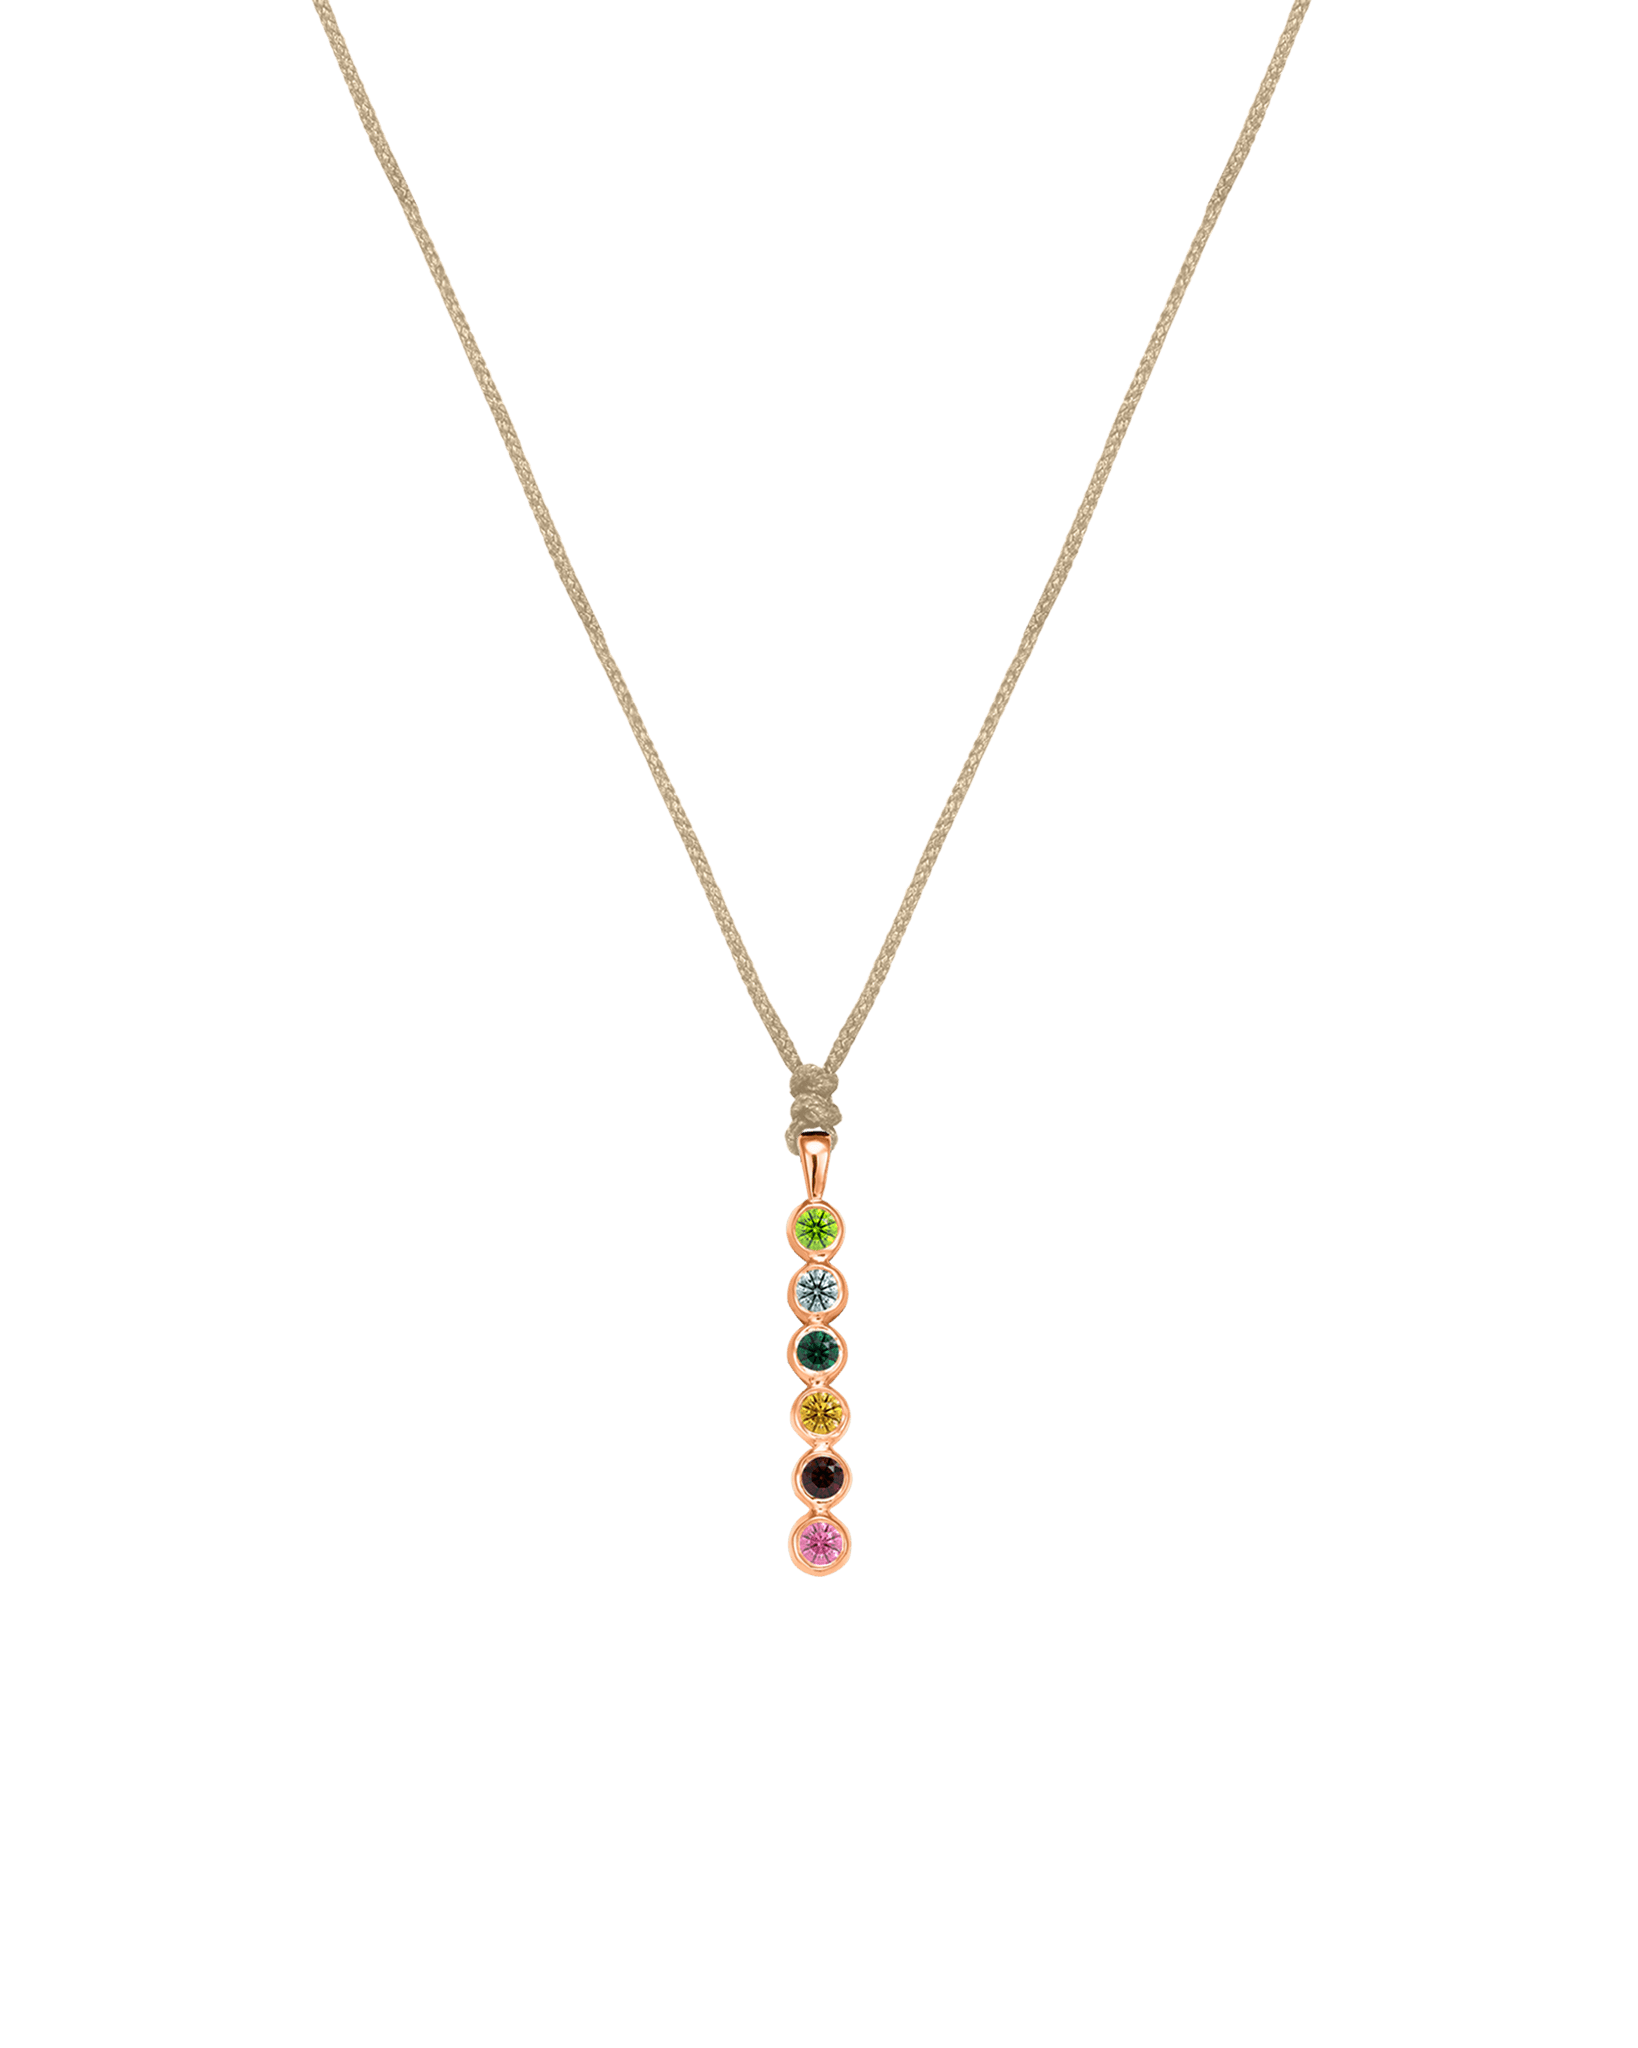 The Birthstones Bar Necklace - 14K Rose Gold Necklaces 14K Solid Gold Sand 2 